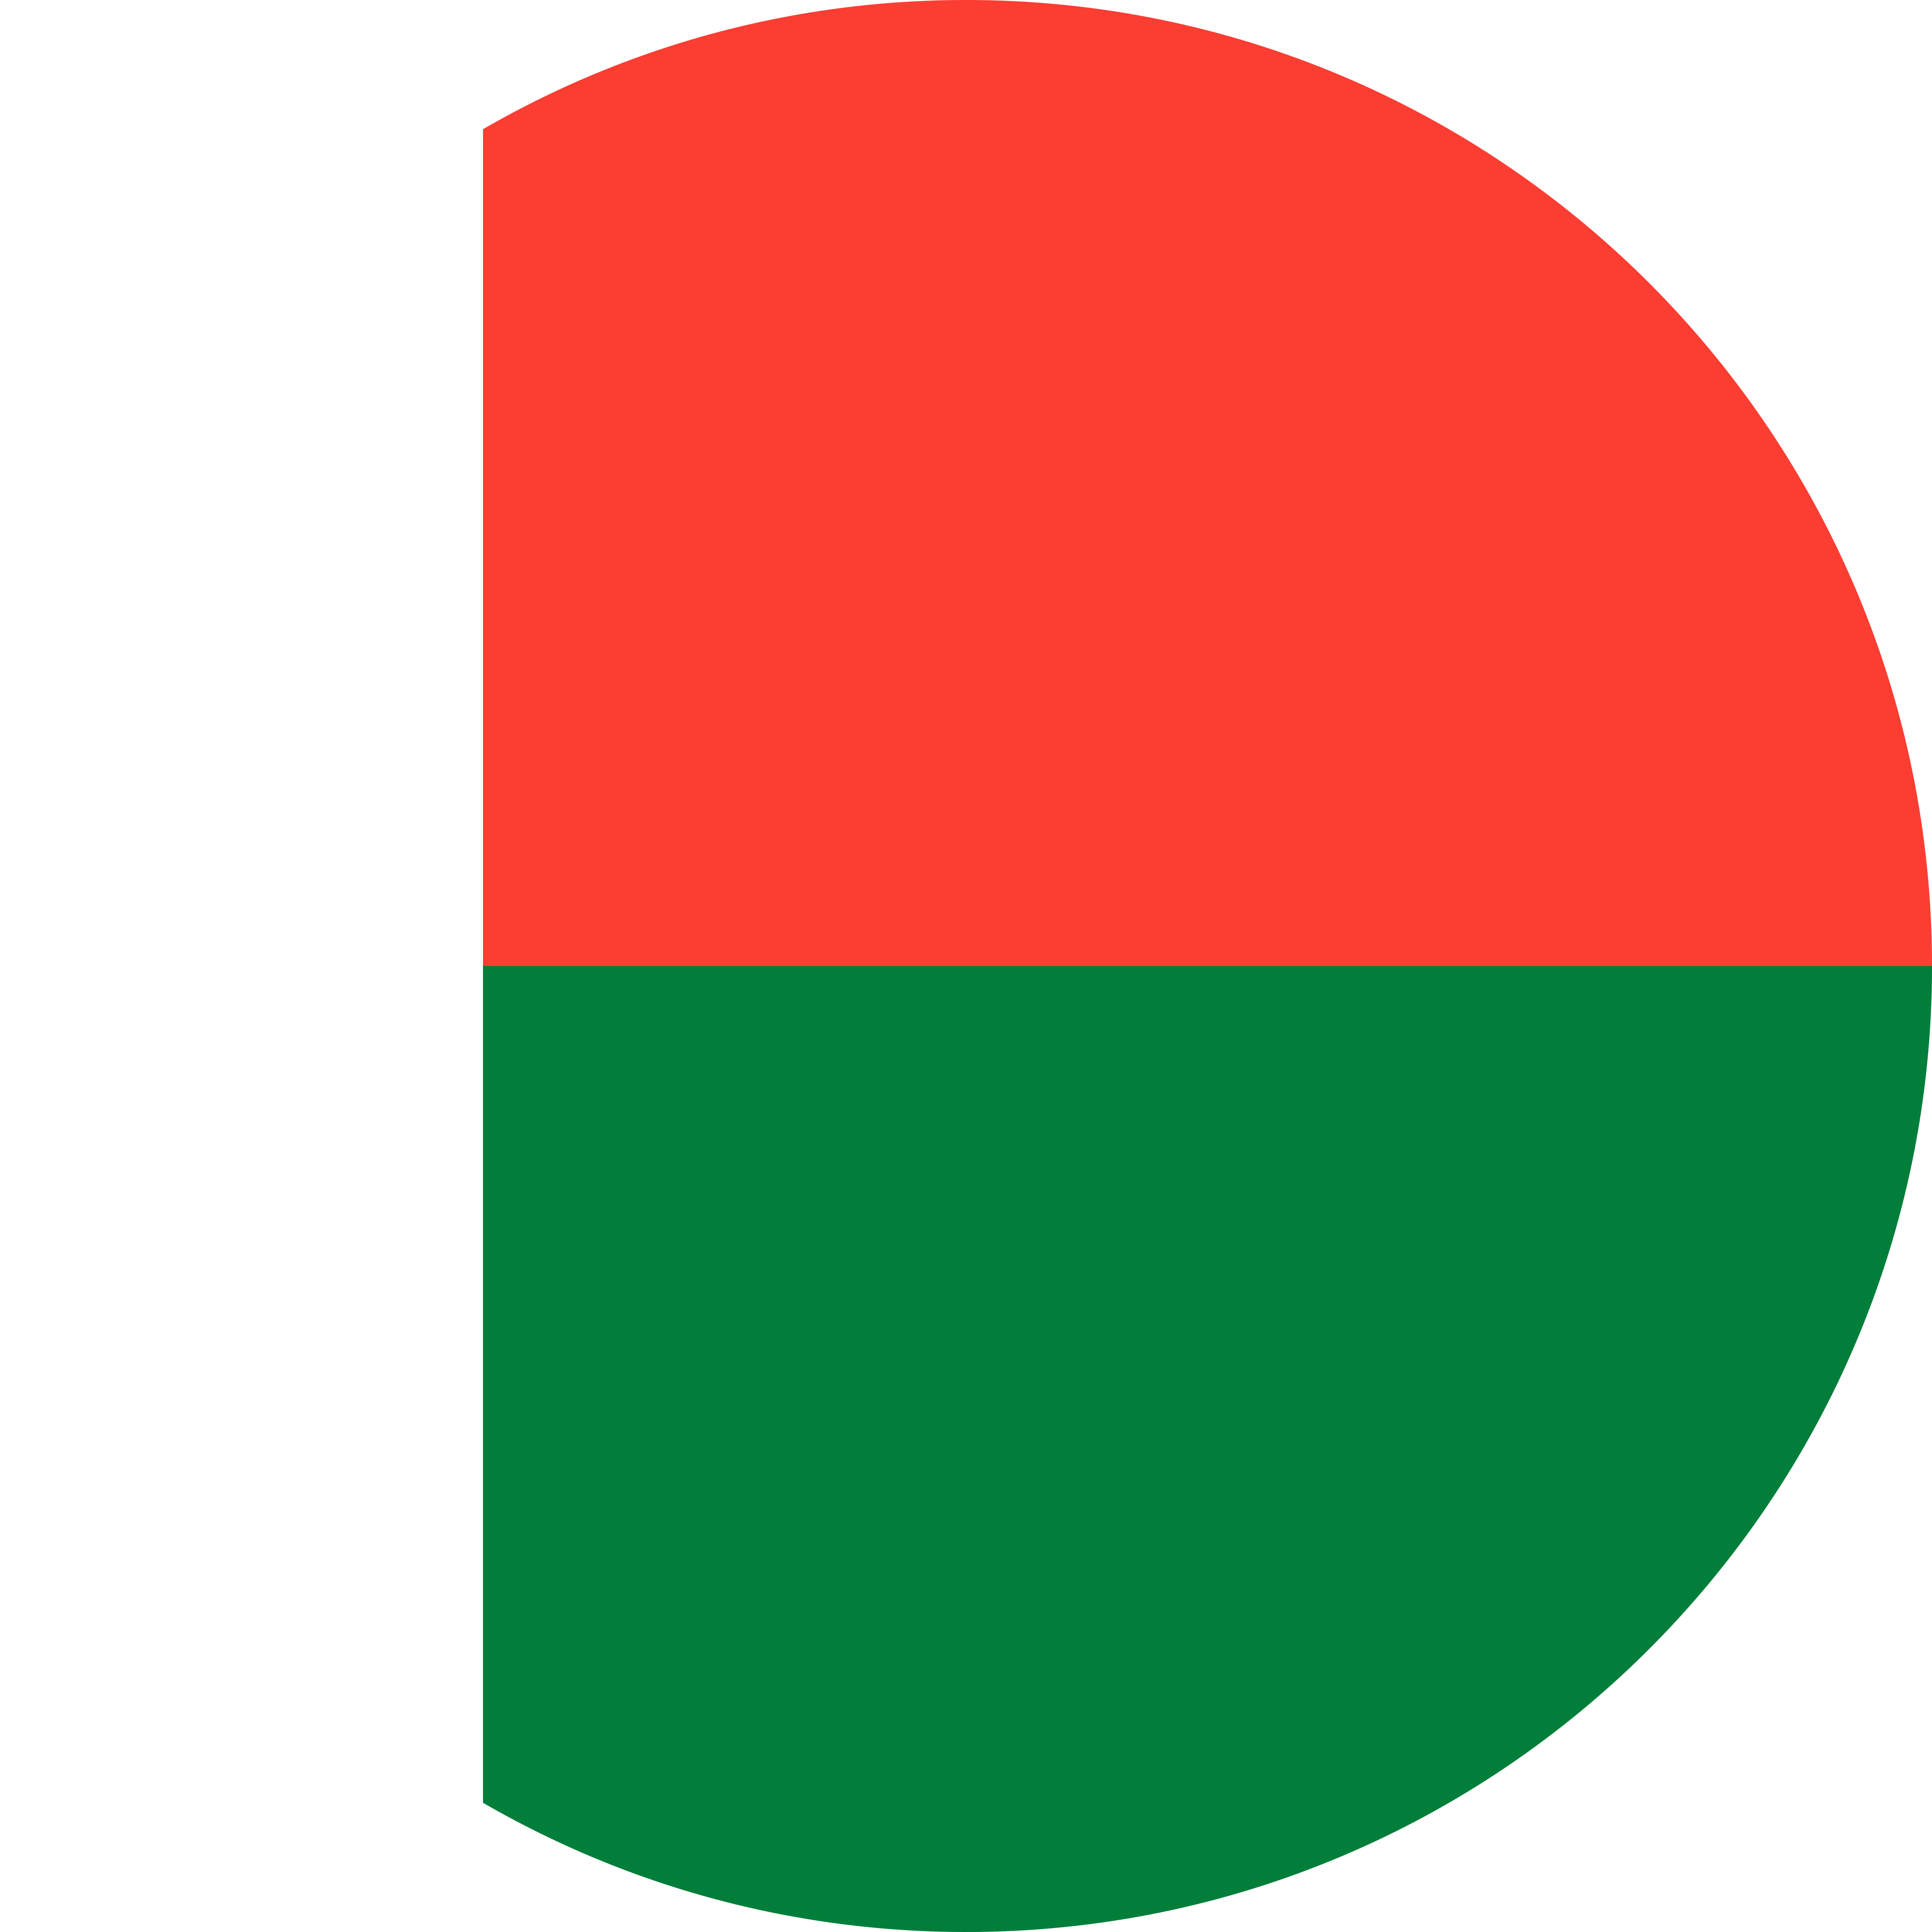 Madagascar Flag PNG Image